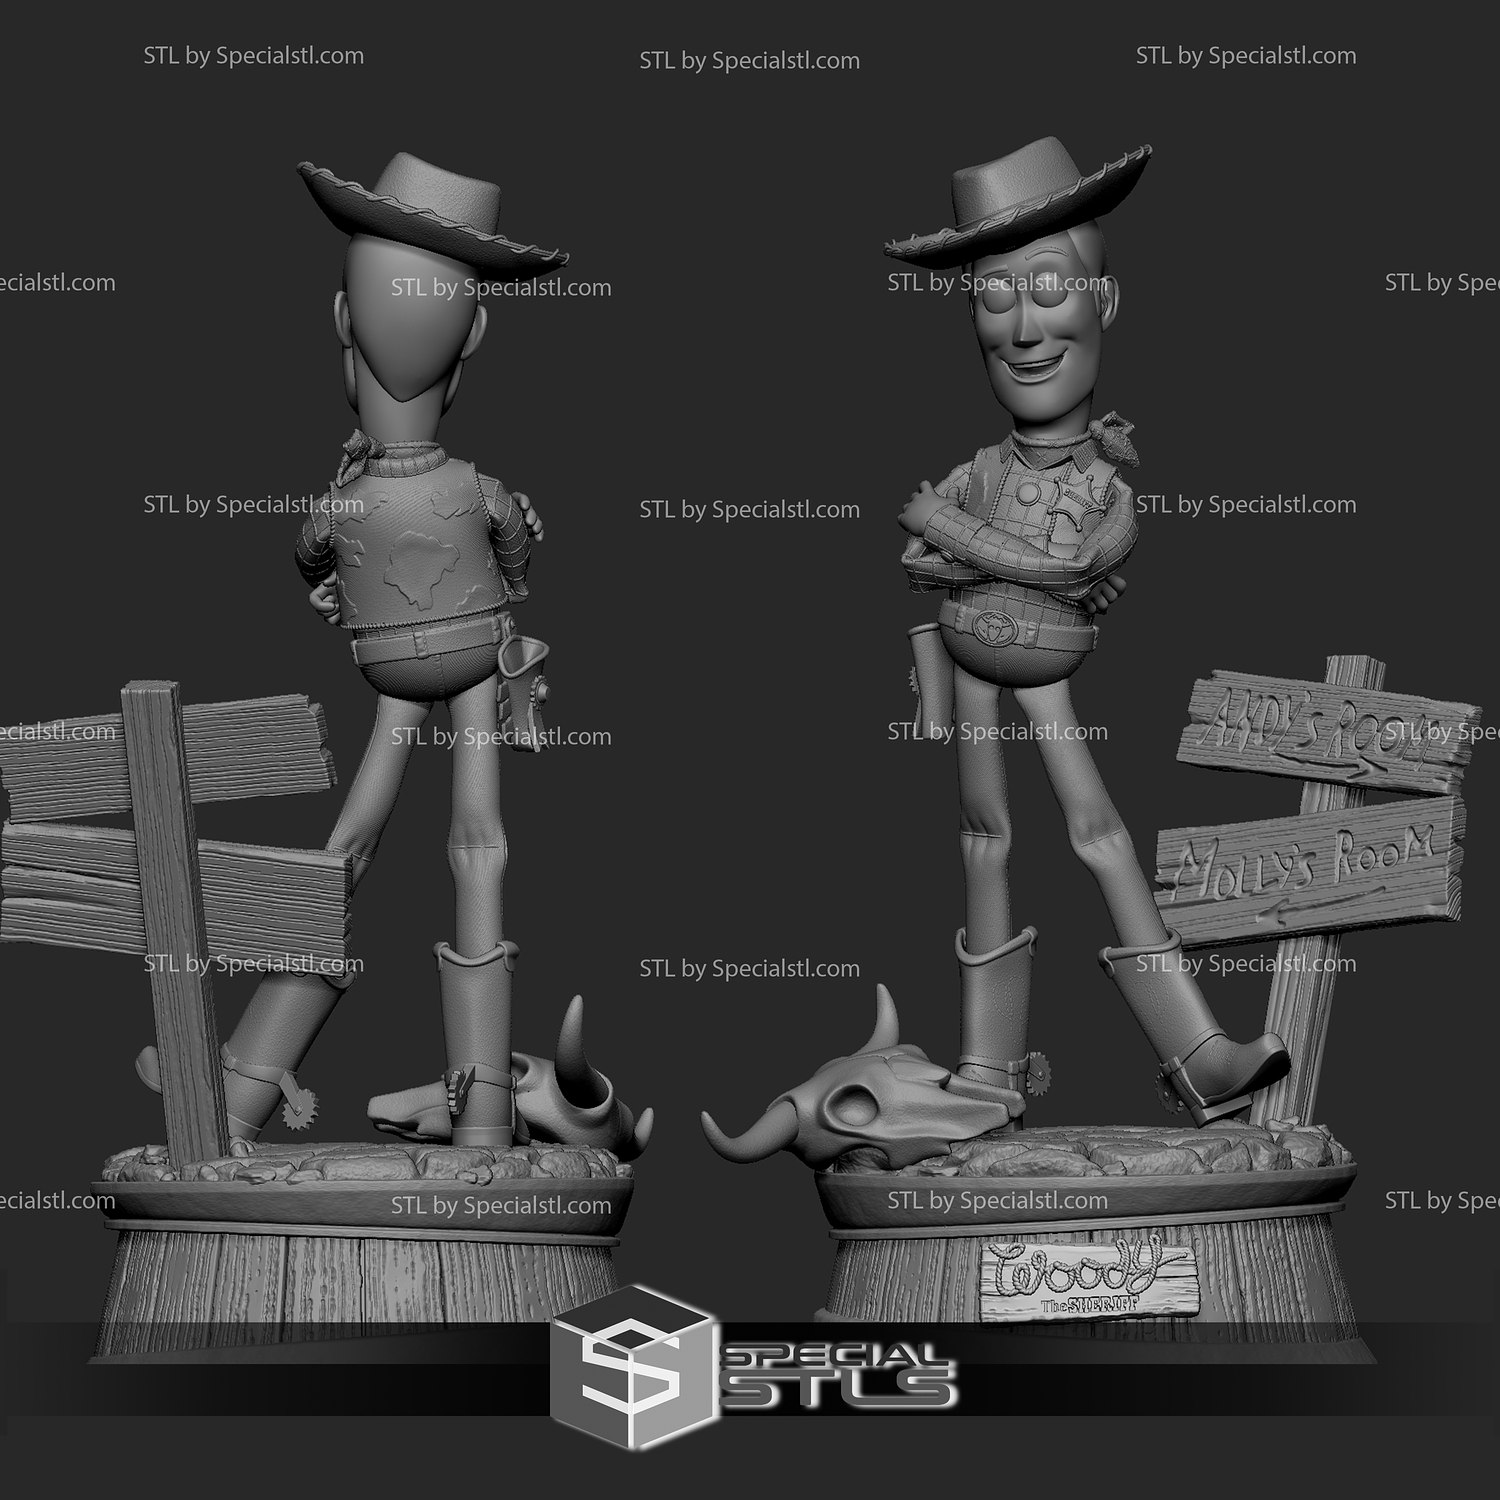 Sheriff Woody Pride 3D Printing Model V2 Toy Story Disney STL Files